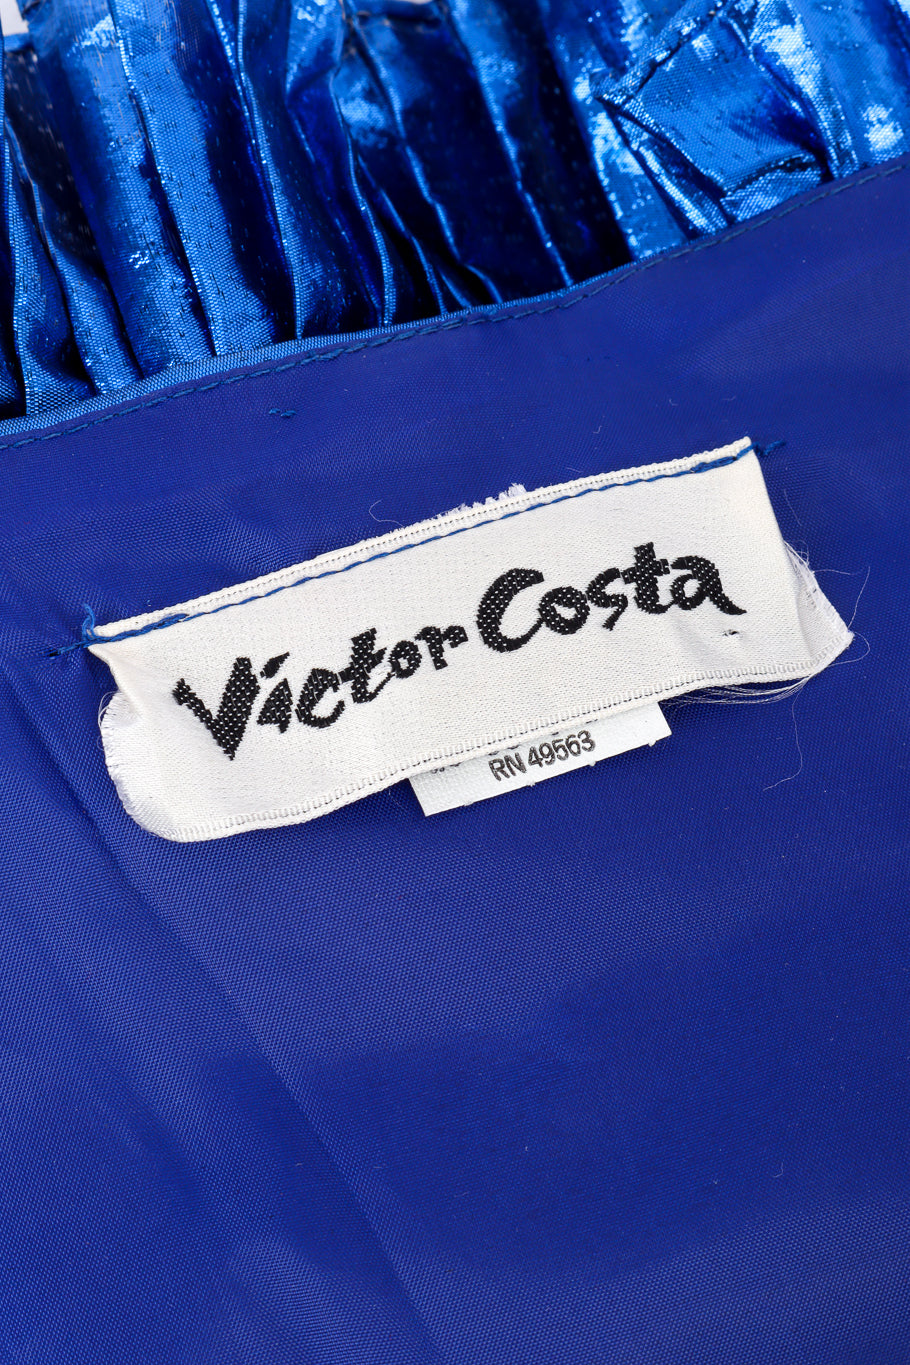 Vintage Victor Costa Metallic Ruffle Gown signature label closeup @recessla